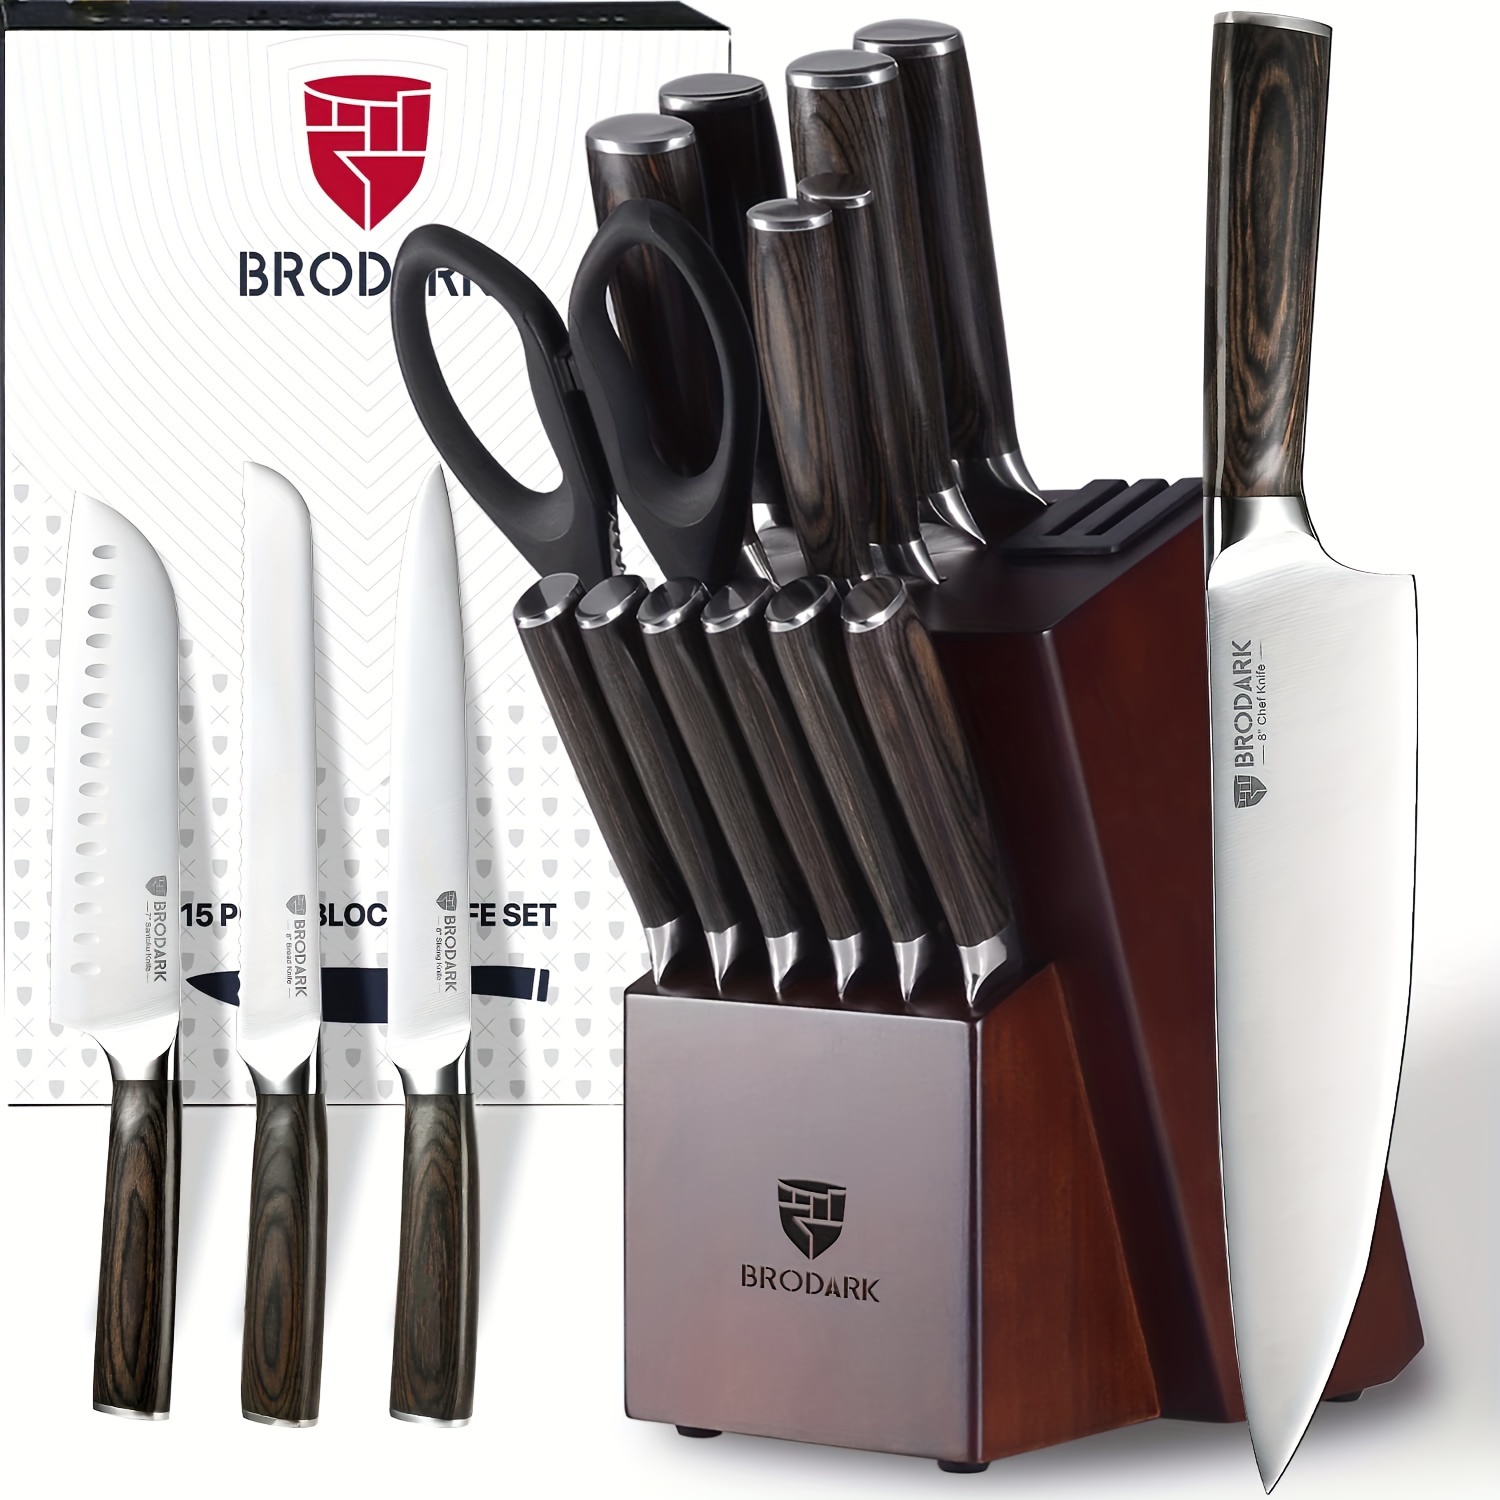 

Brodark Kitchen Knife Set With Block, Food Grade 15 Pcs German Stainless Steel Professional Chef Knife Set With Knife Sharpener, Full Tang Knife Block Set, Gift Box